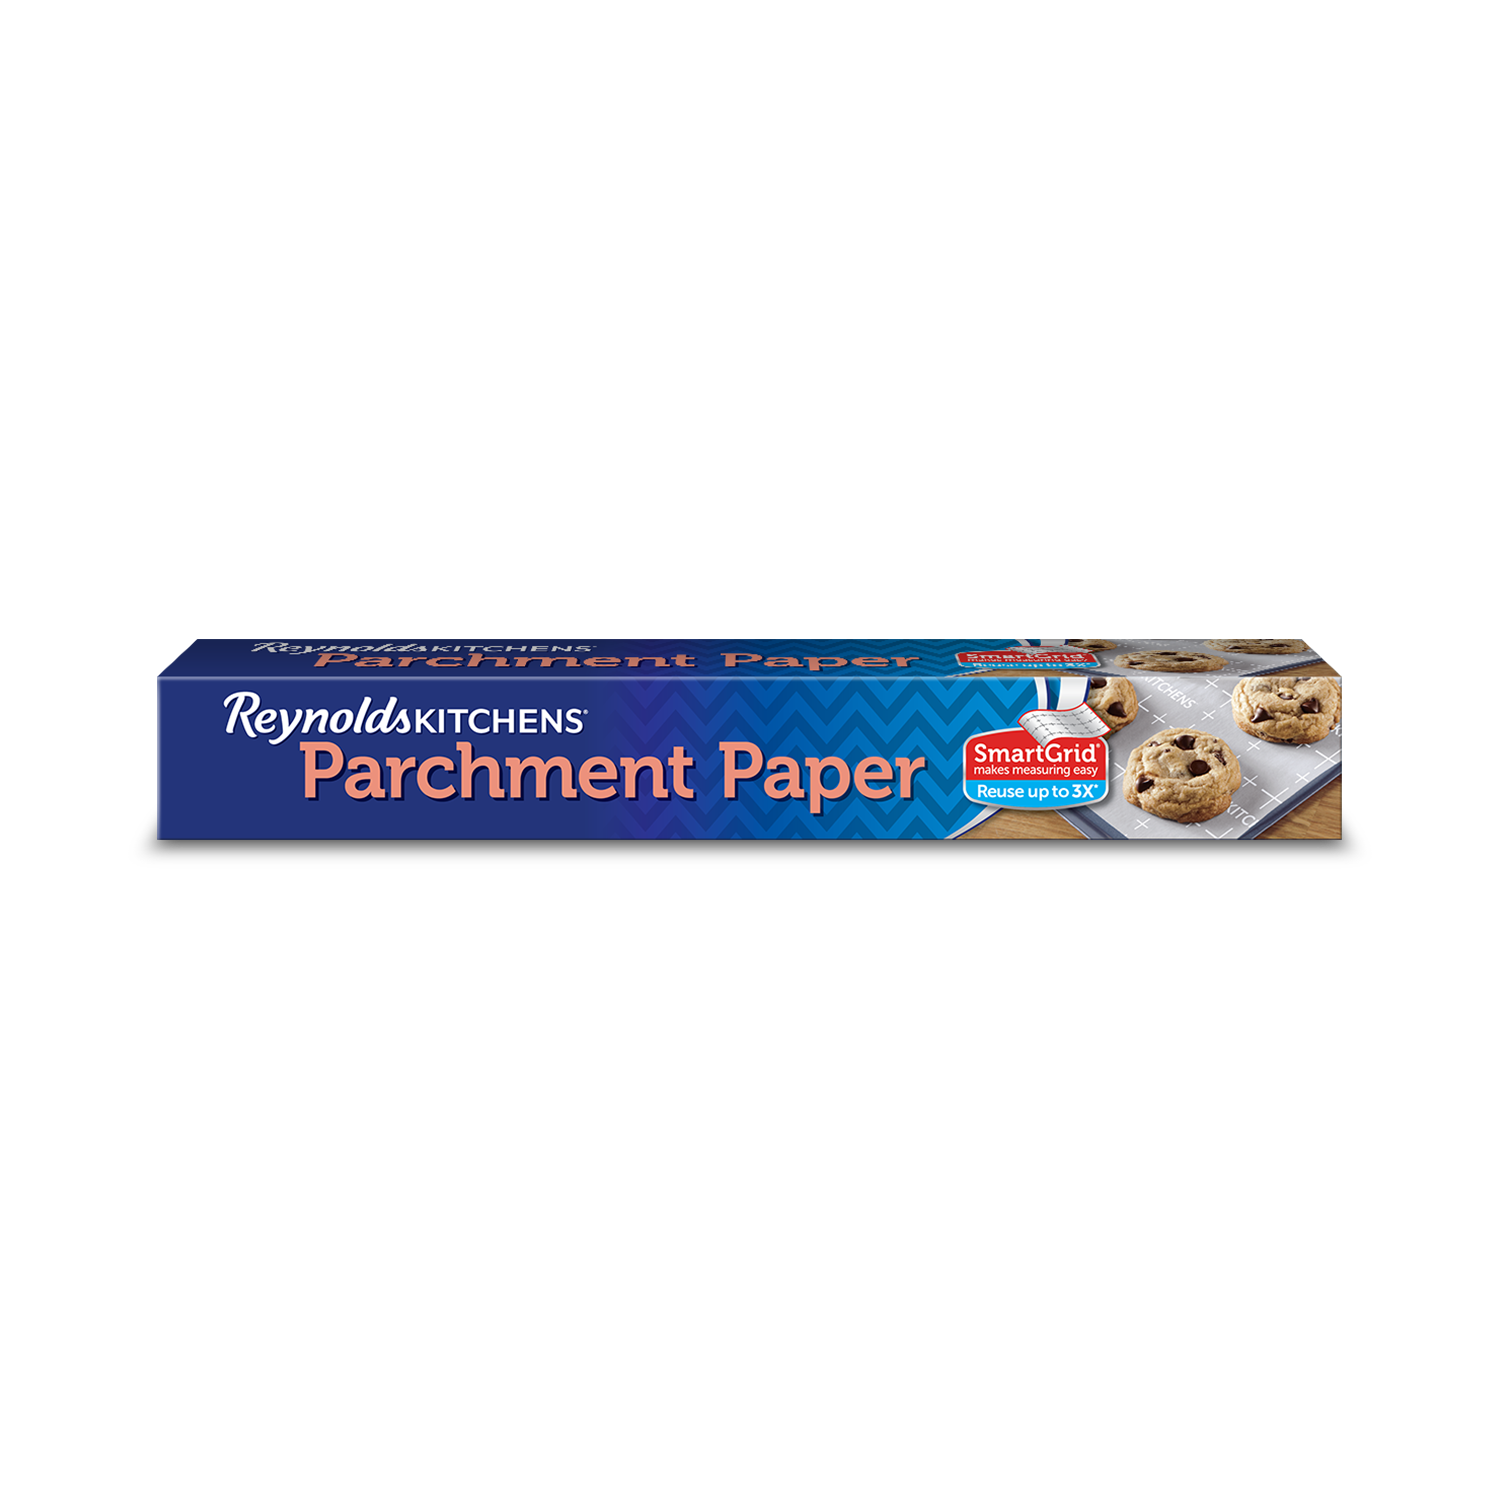 Parchment Paper Rolls with Smartgrid